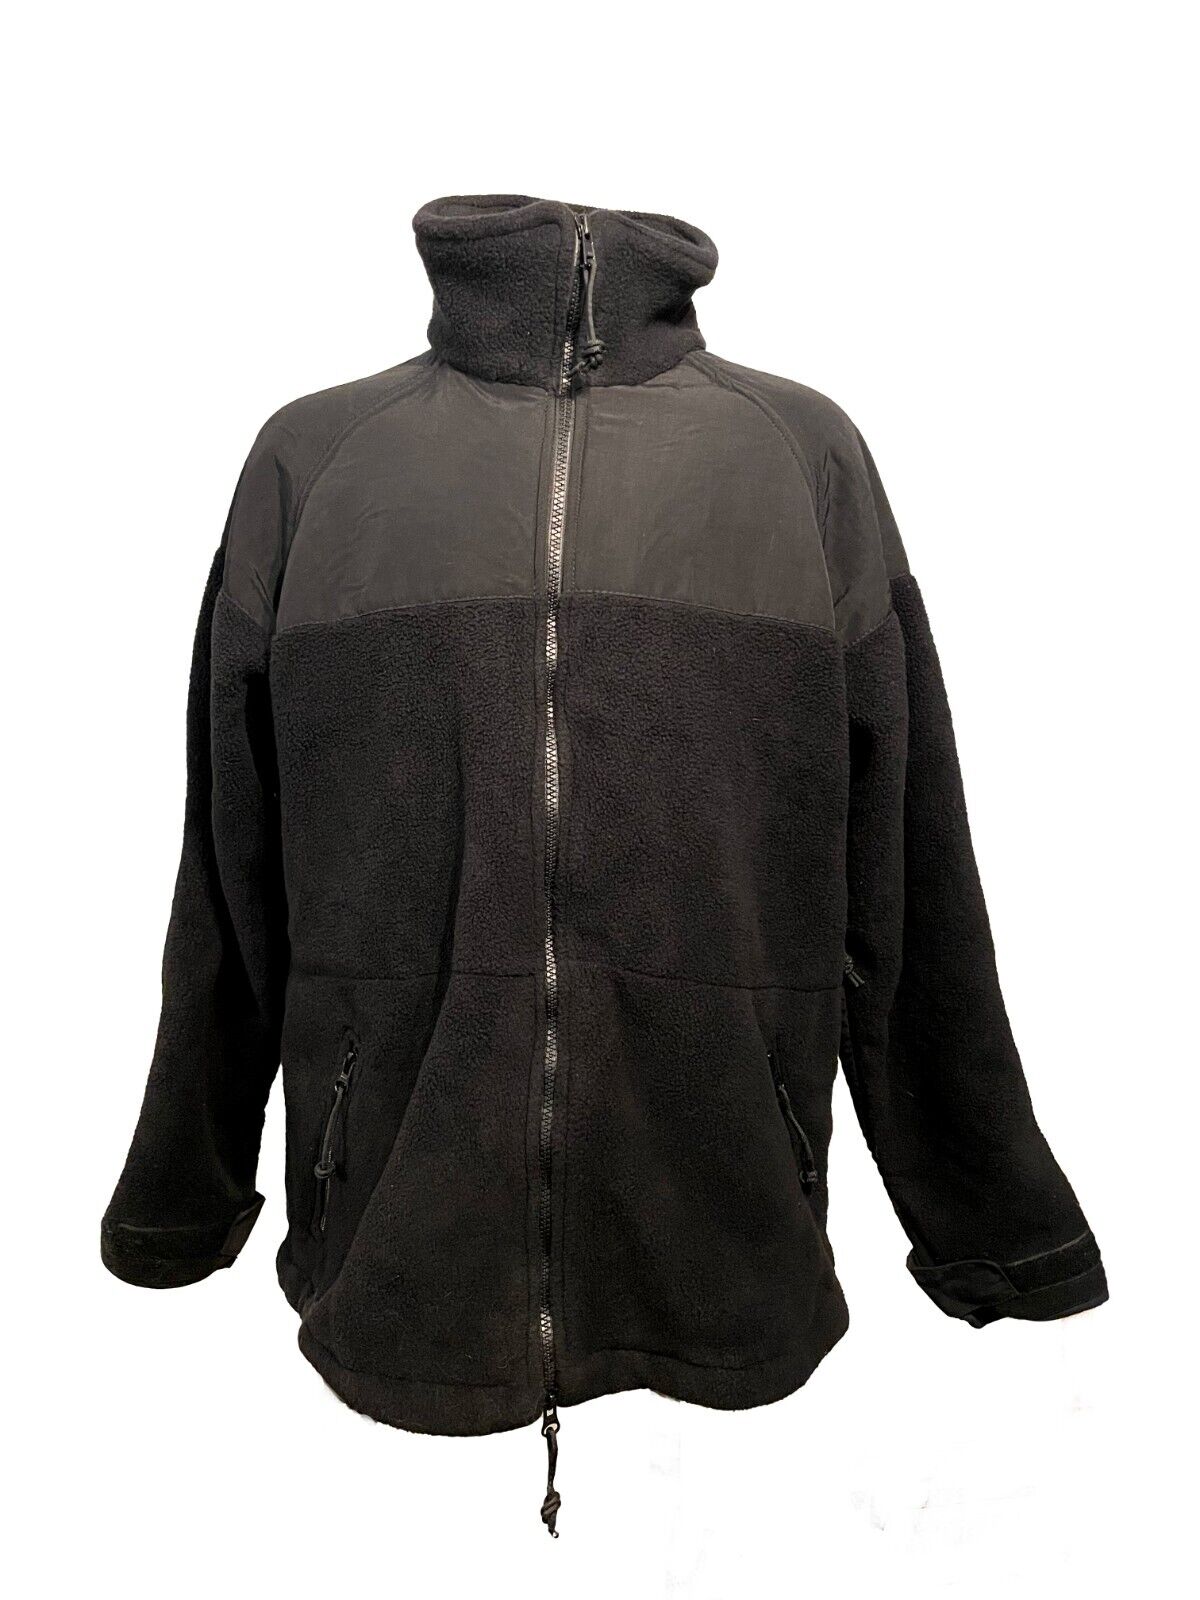 DSCP by Peckham US Military  Black Polartec  Fleece Cold Weather Jacket SZ S